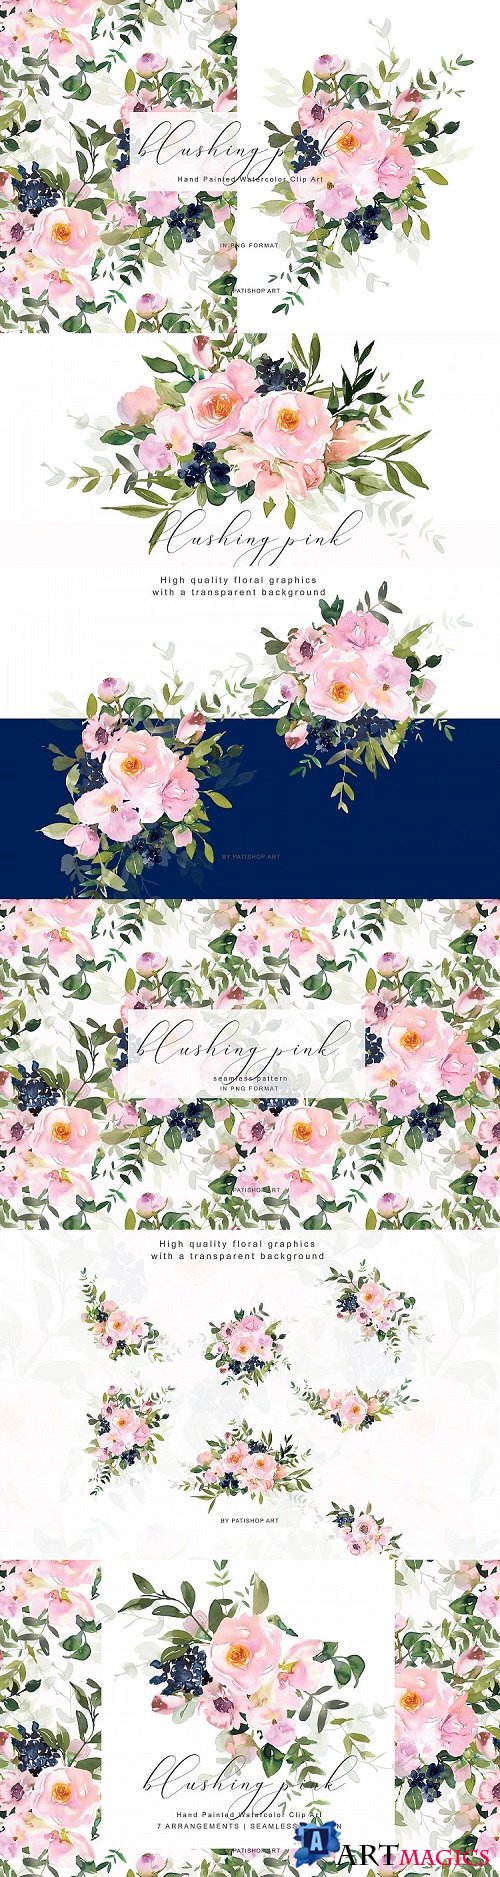 Romantic Watercolor Blush Floral Clipart Collection - 282072